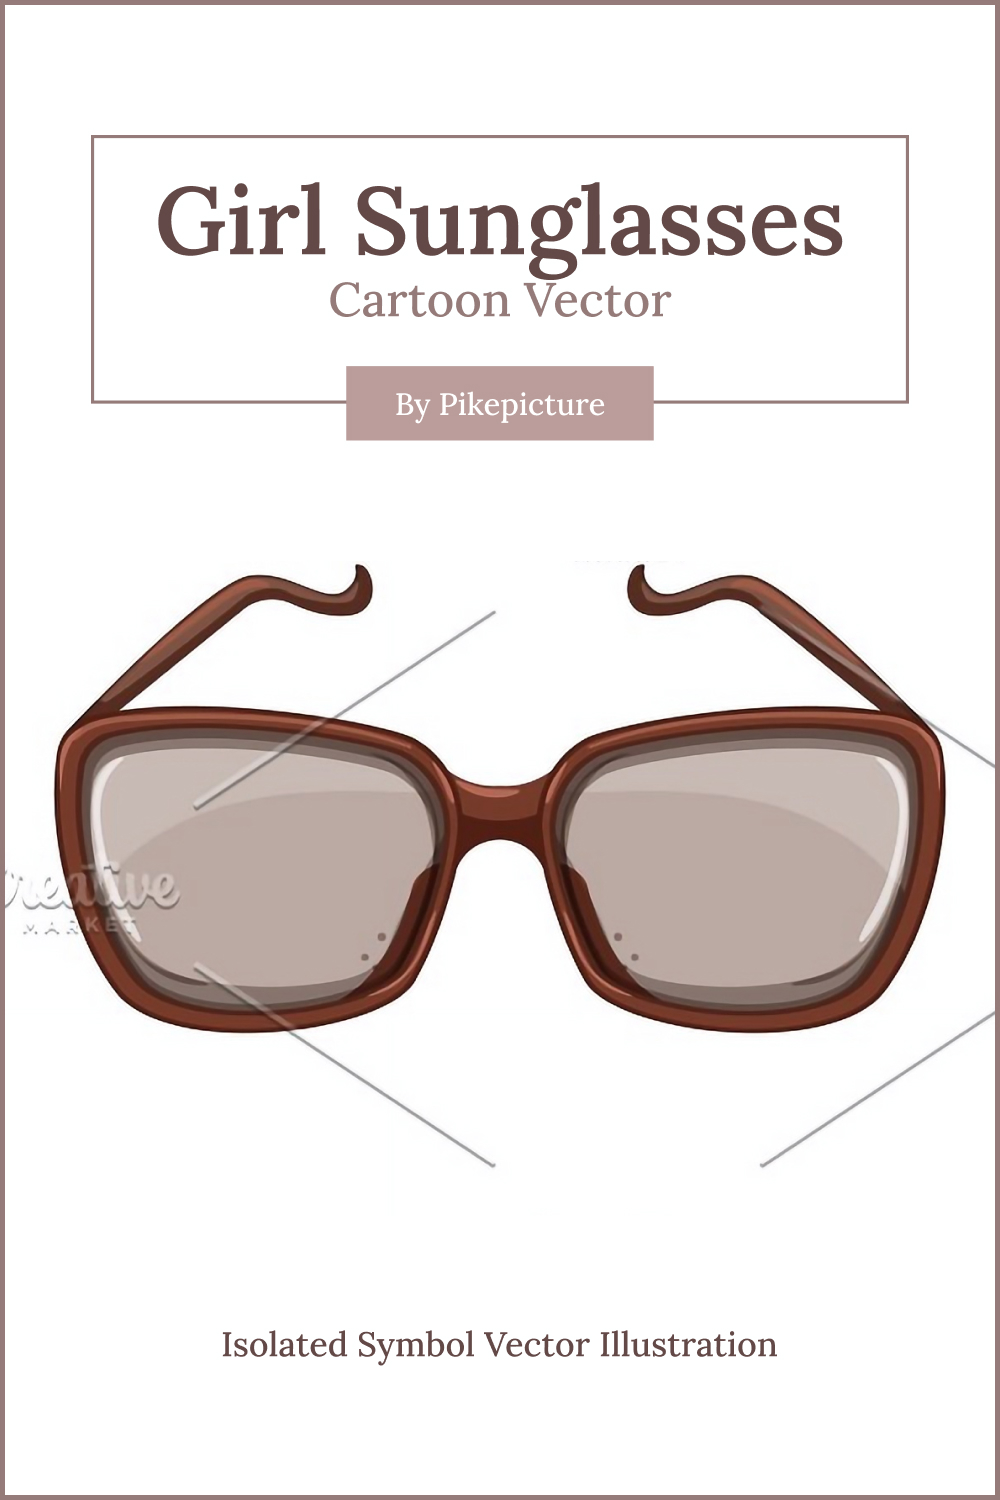 Girl Sunglasses Women Cartoon Vector Pinterest Cover.